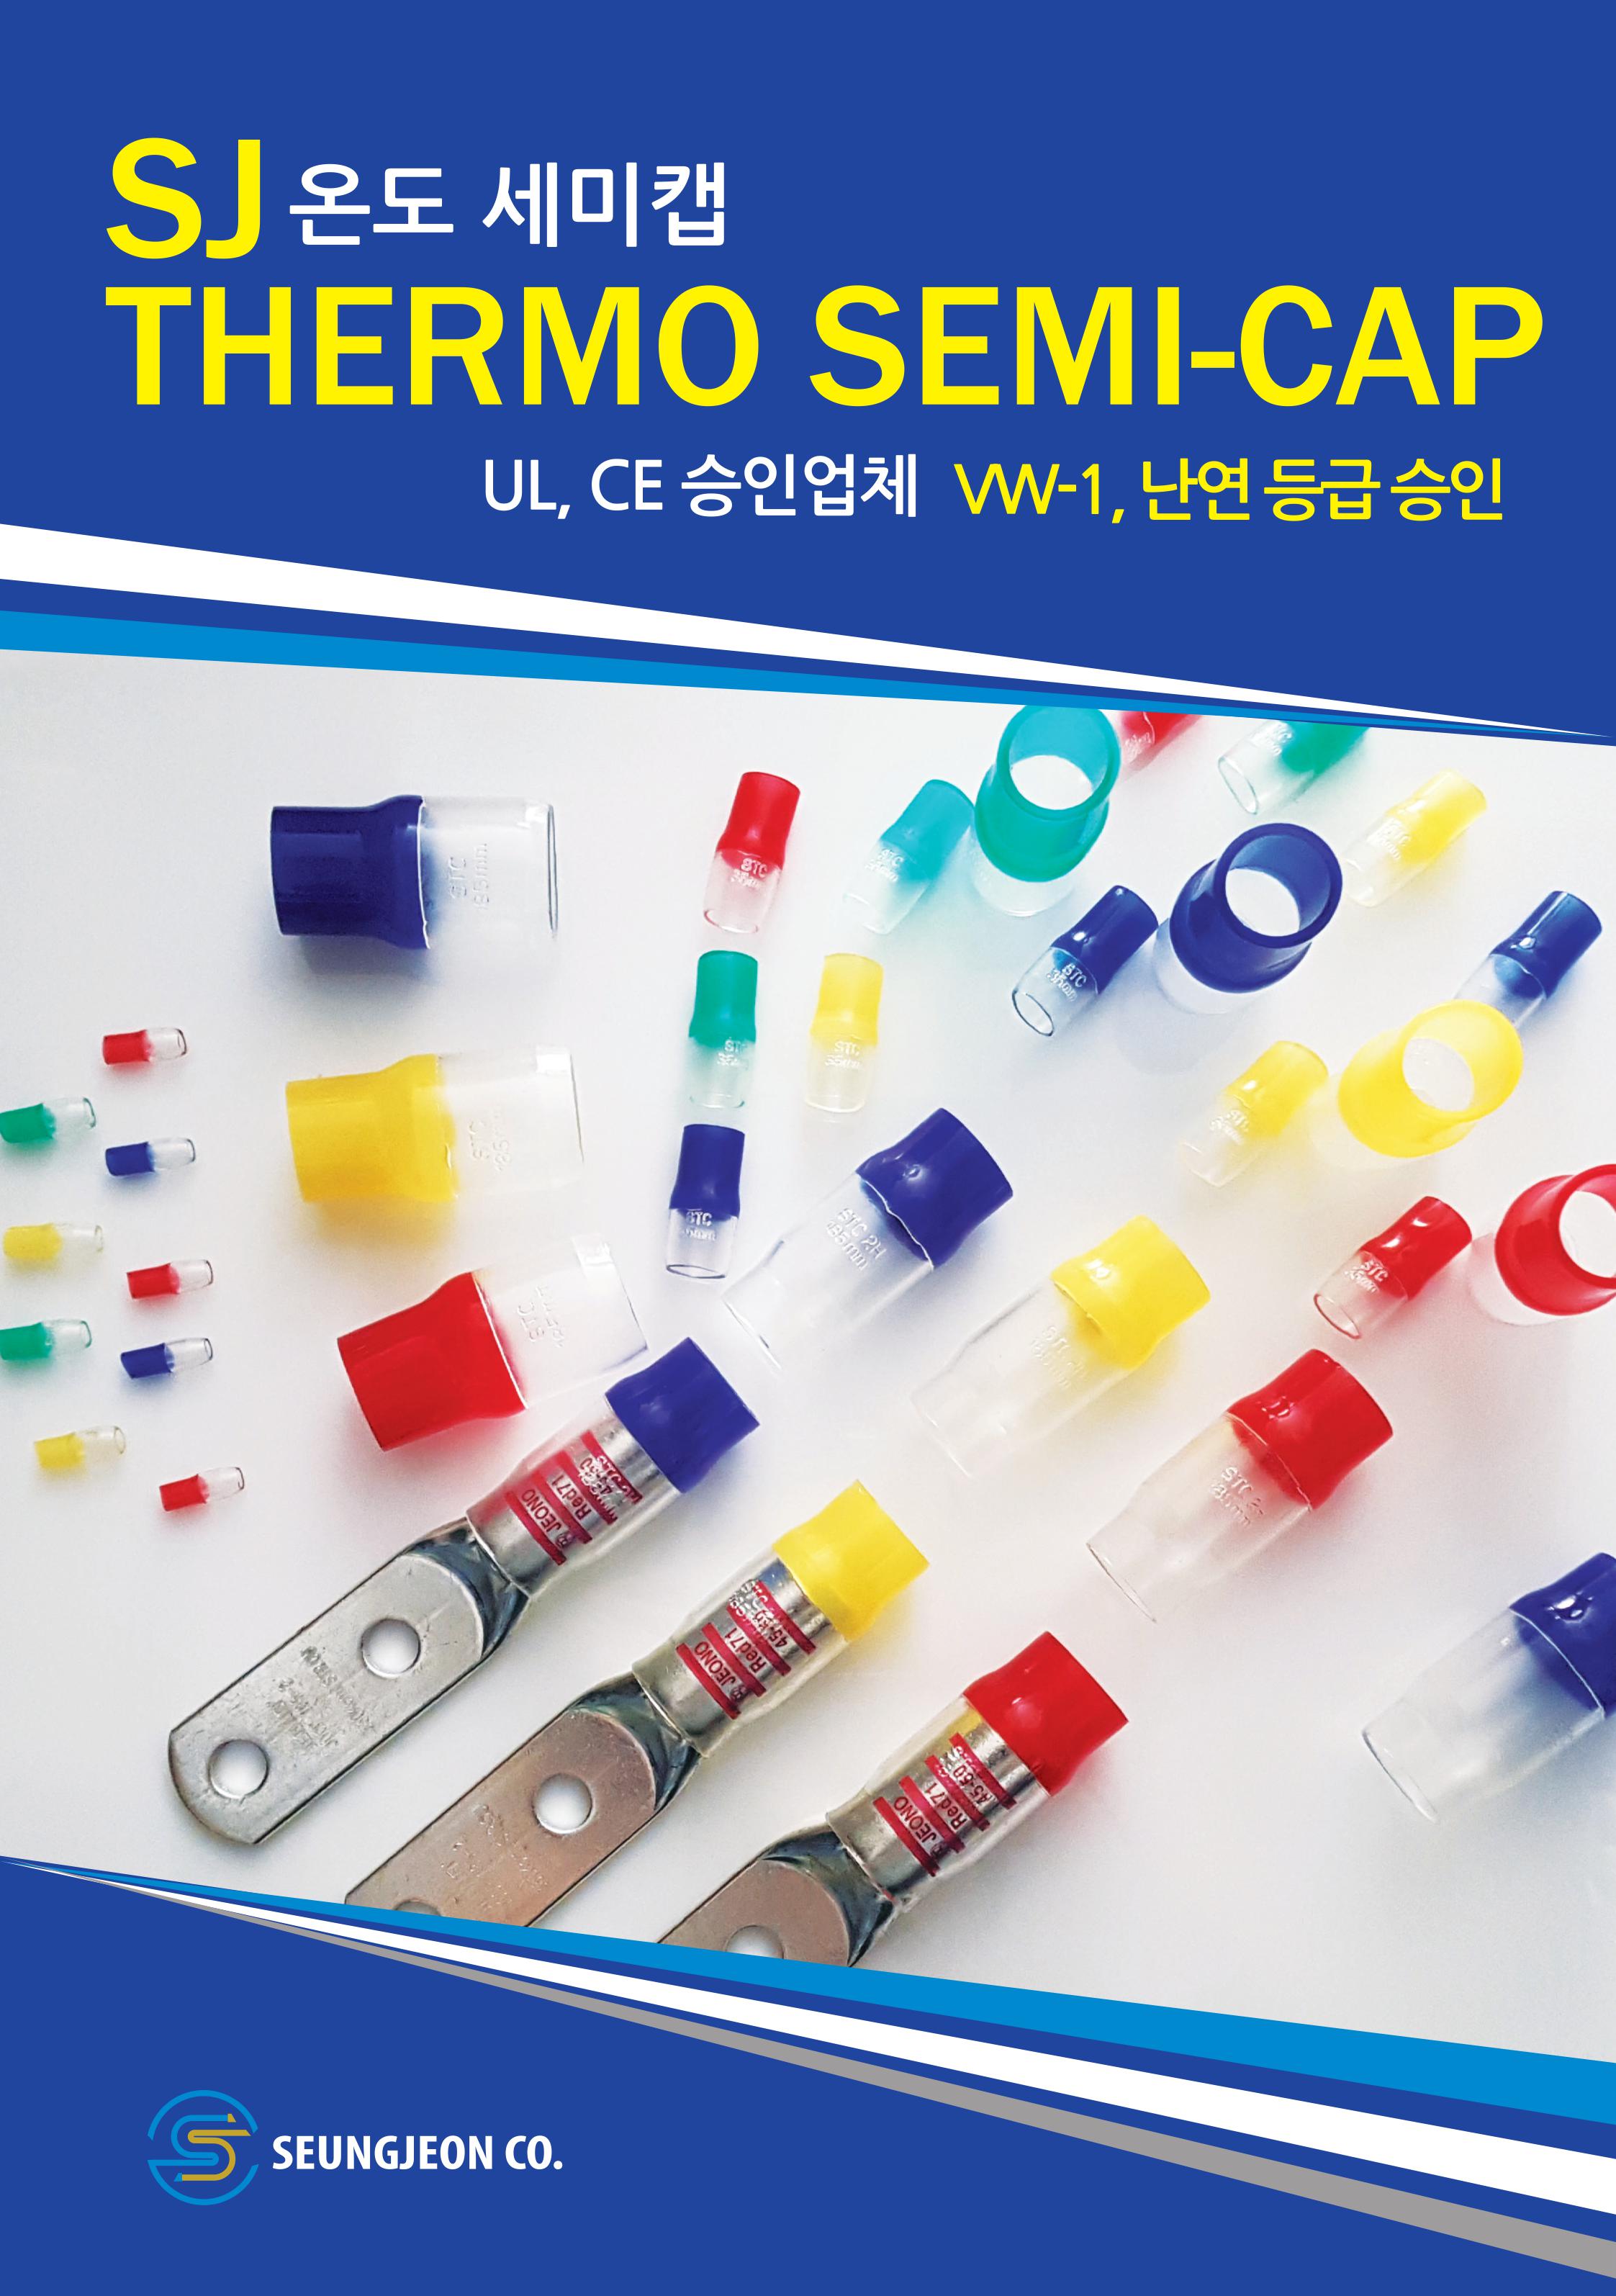 sj온도 세미캡 thermo semi-cap ul,ce승입업체 vw-1, 난연등급 승인